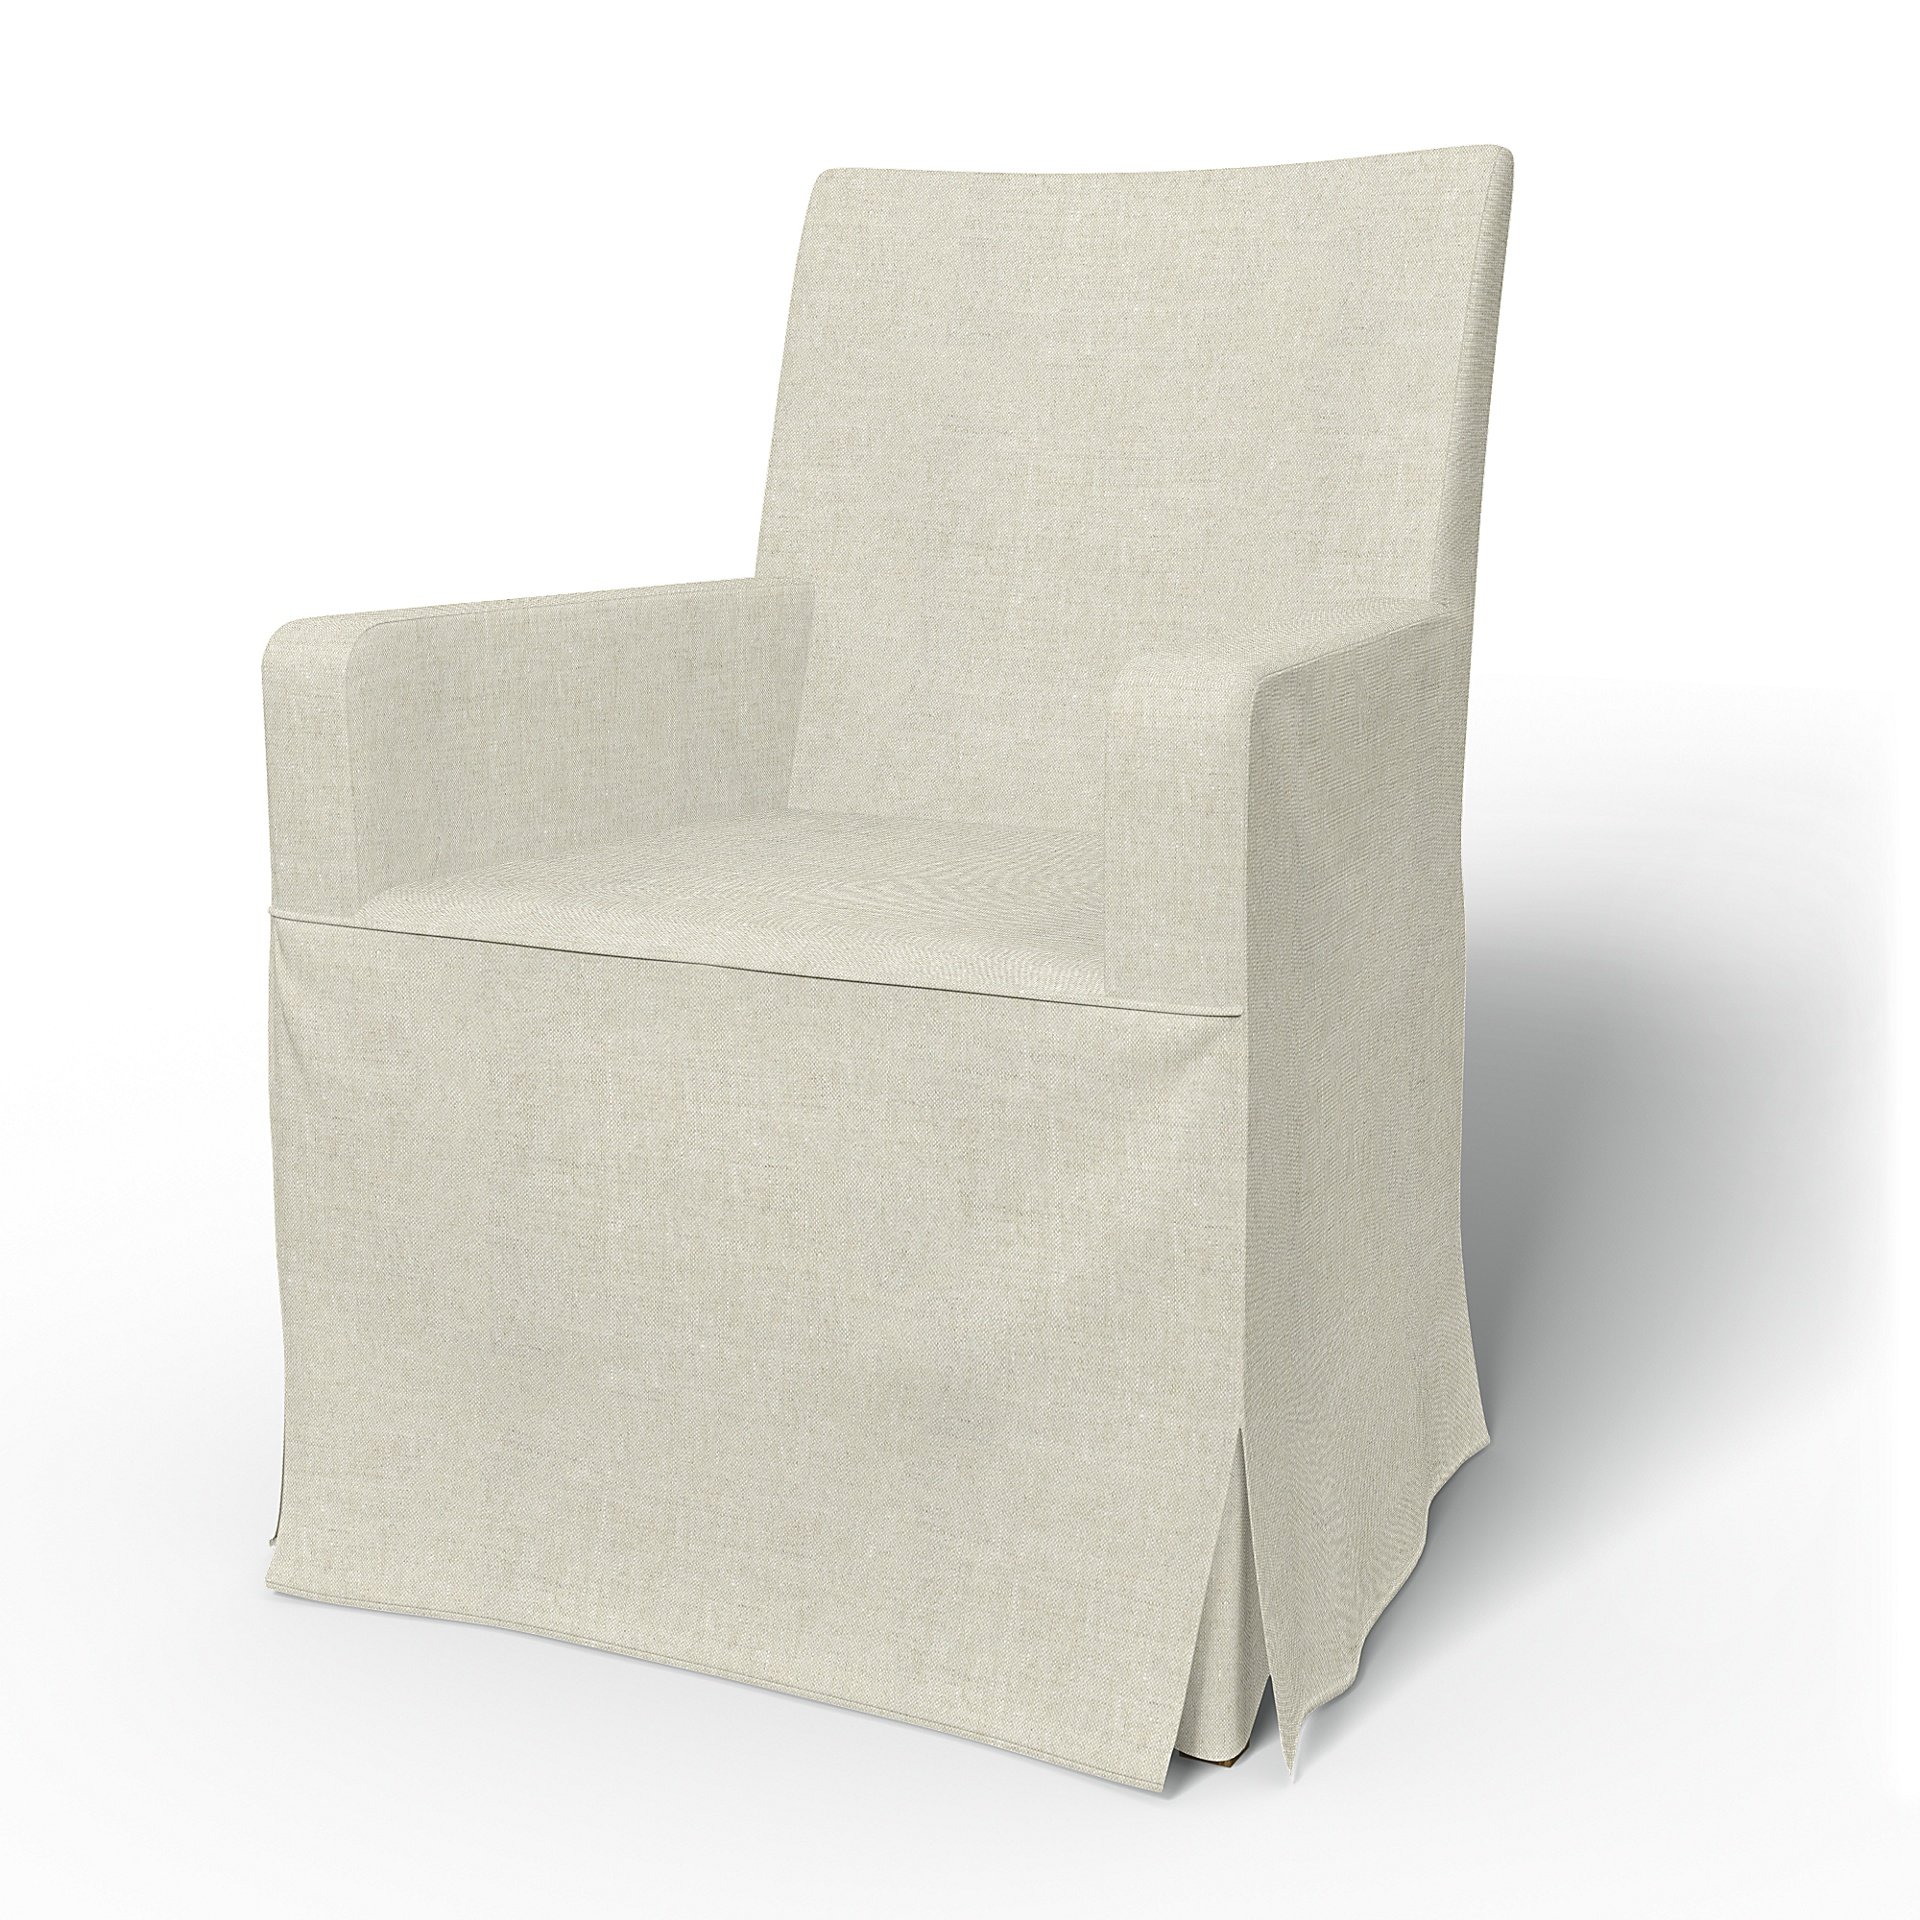 IKEA - Henriksdal, Chair cover w/ armrests, long skirt box pleat, Natural, Linen - Bemz